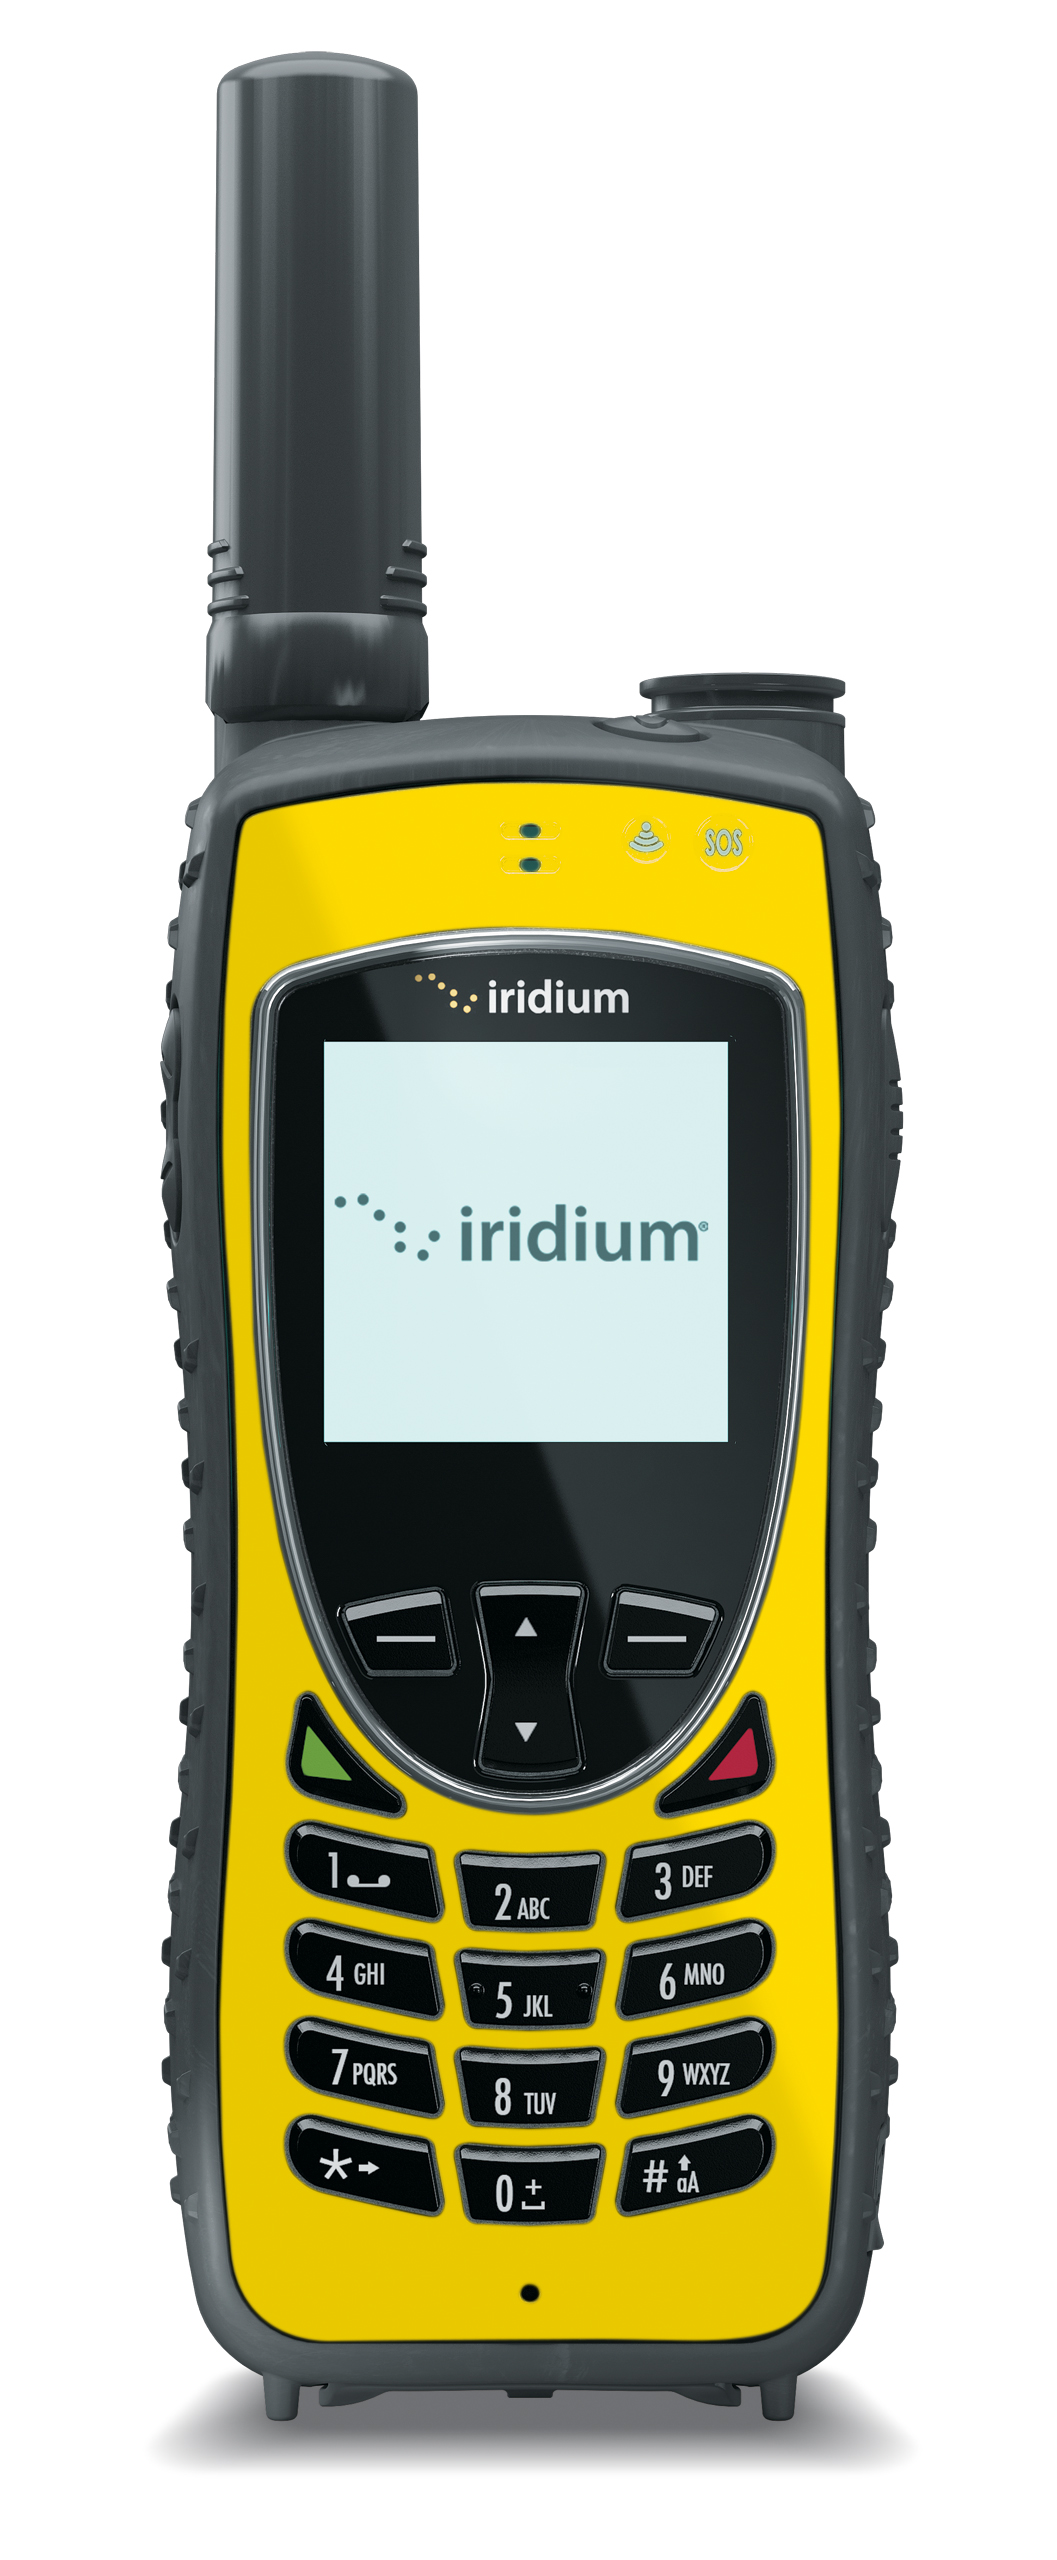 Iridium Extreme in Safety Yellow